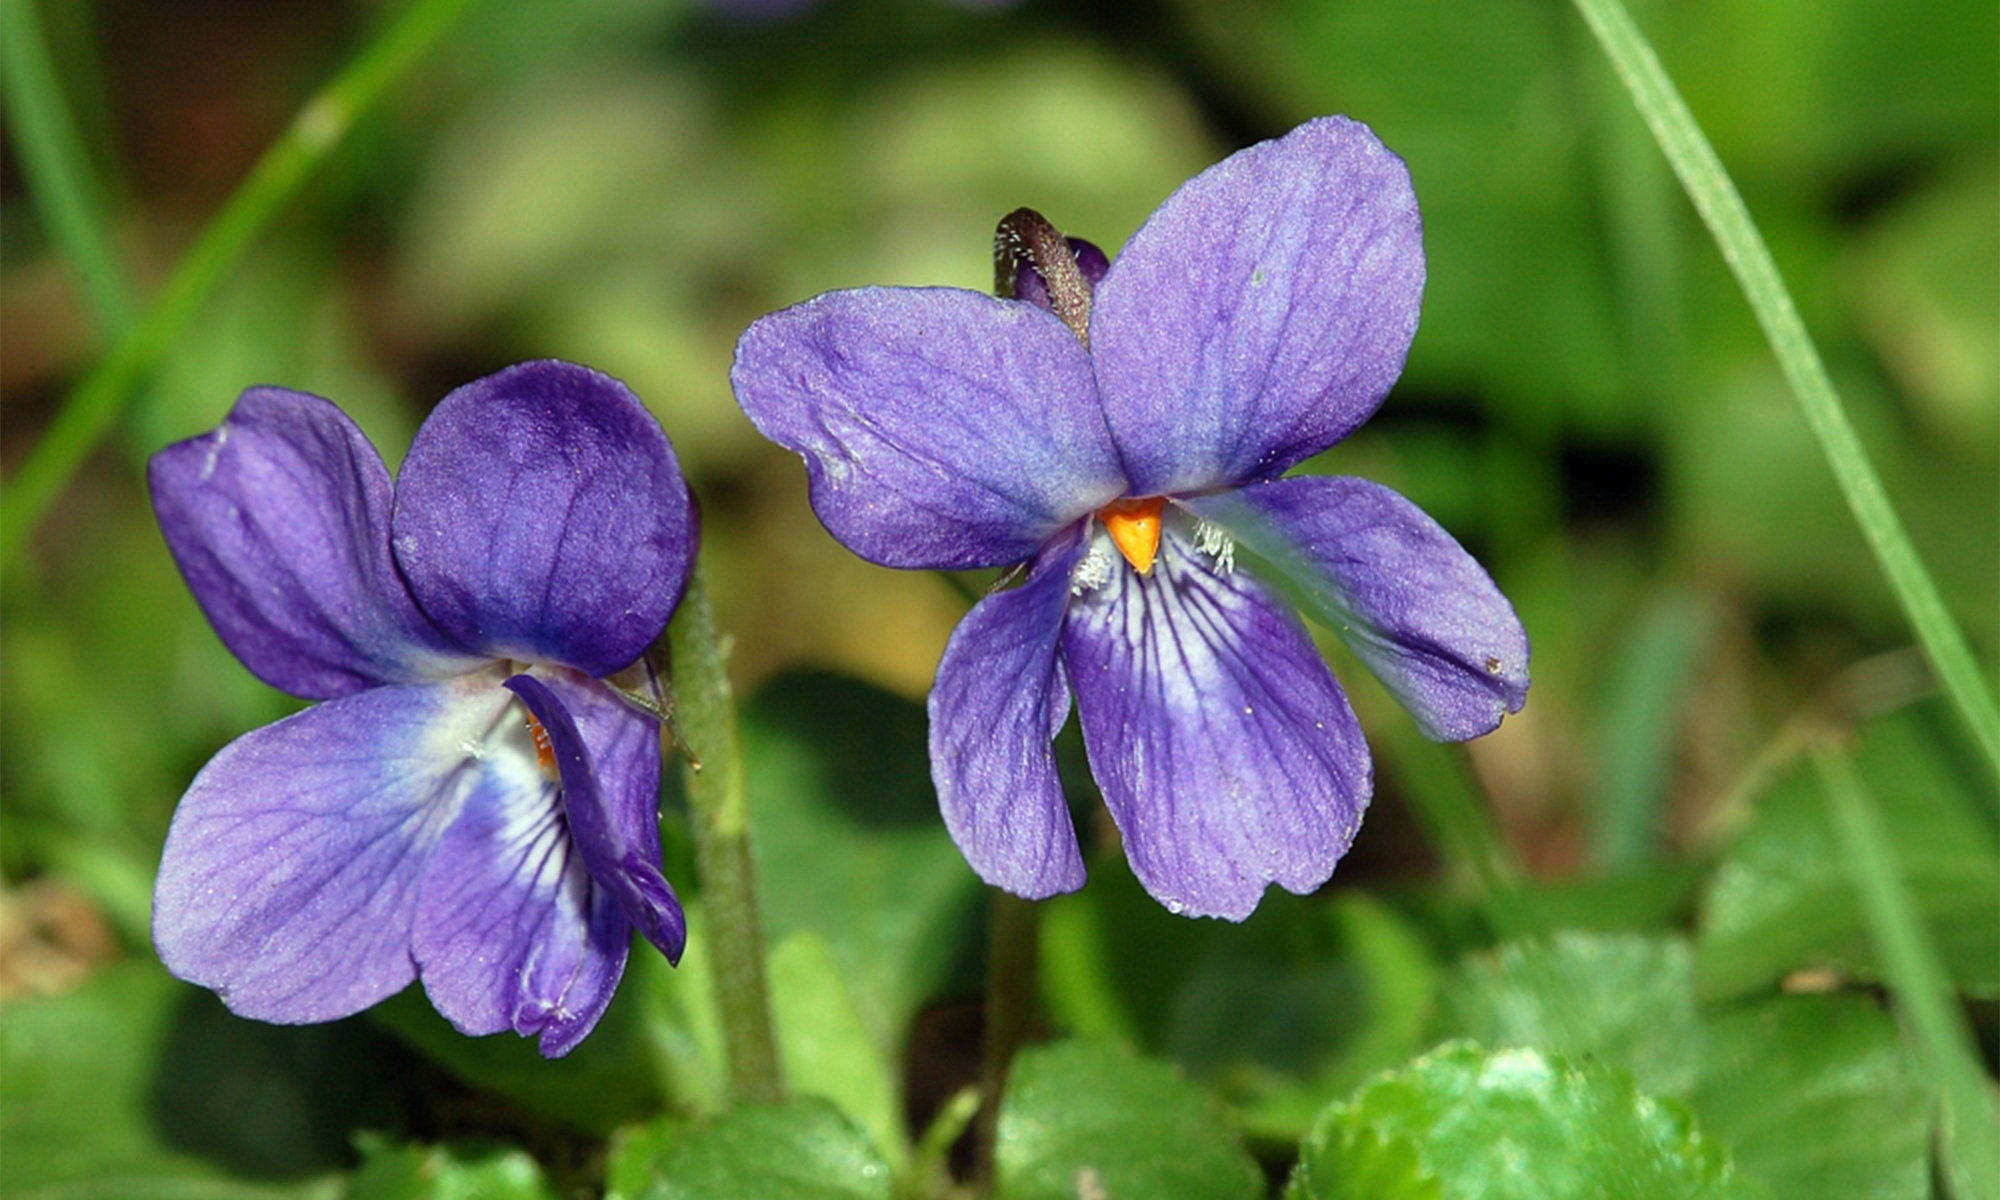 30ml (1oz) Violet Flower Absolute Essential Oil (Viola odorata) - 100% Pure  Undiluted Uncut